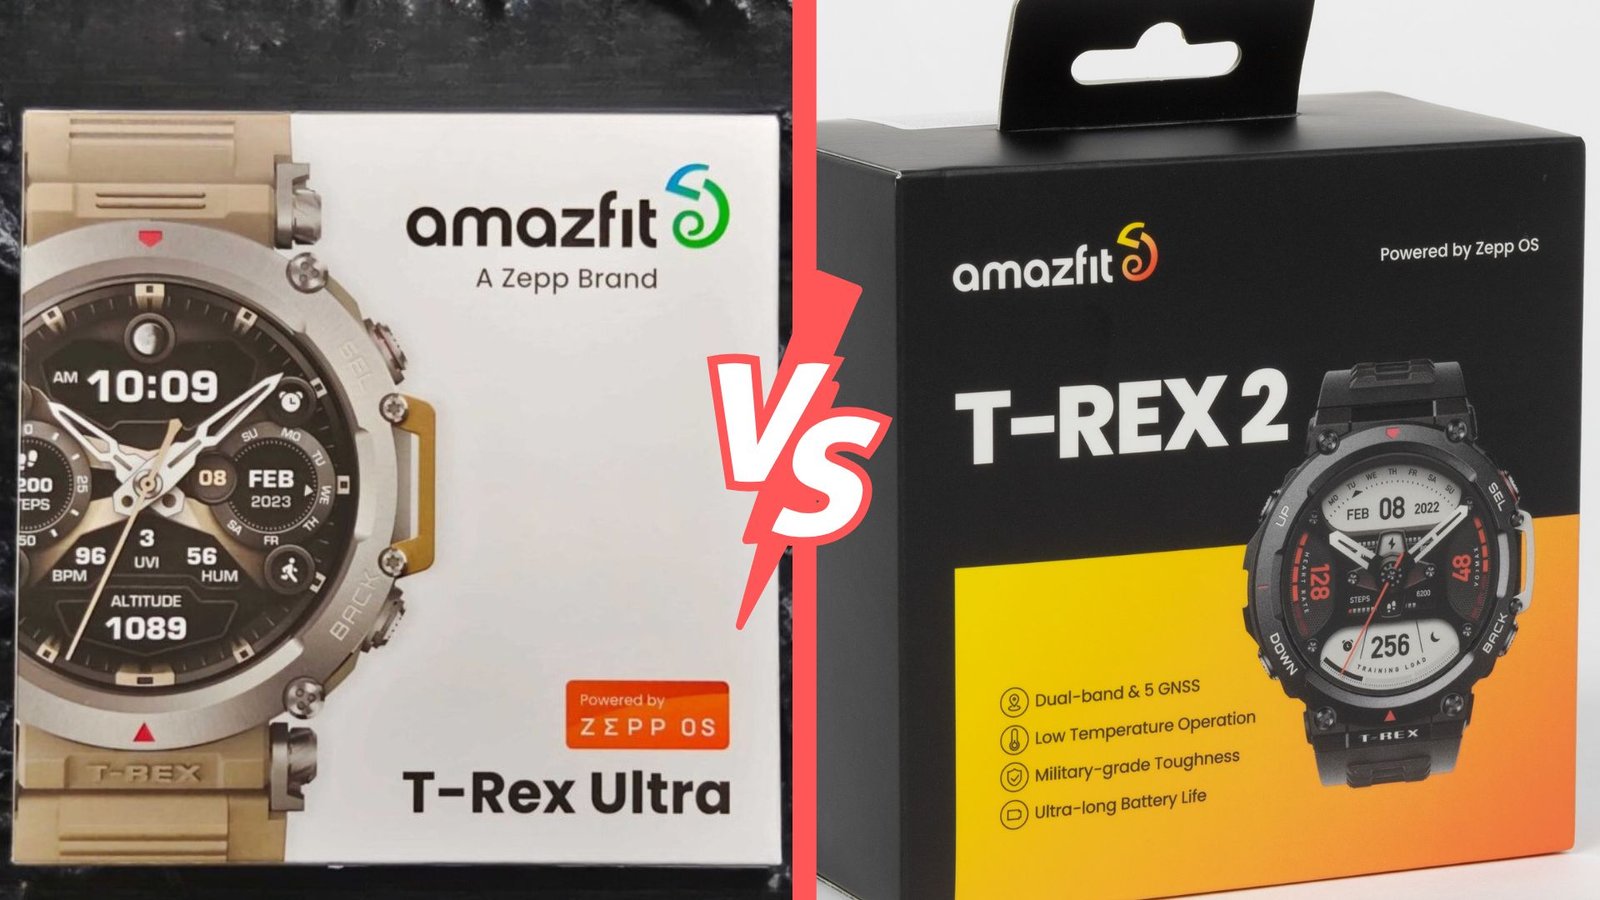 Amazfit T-Rex Ultra VS Amazfit T-Rex 2 